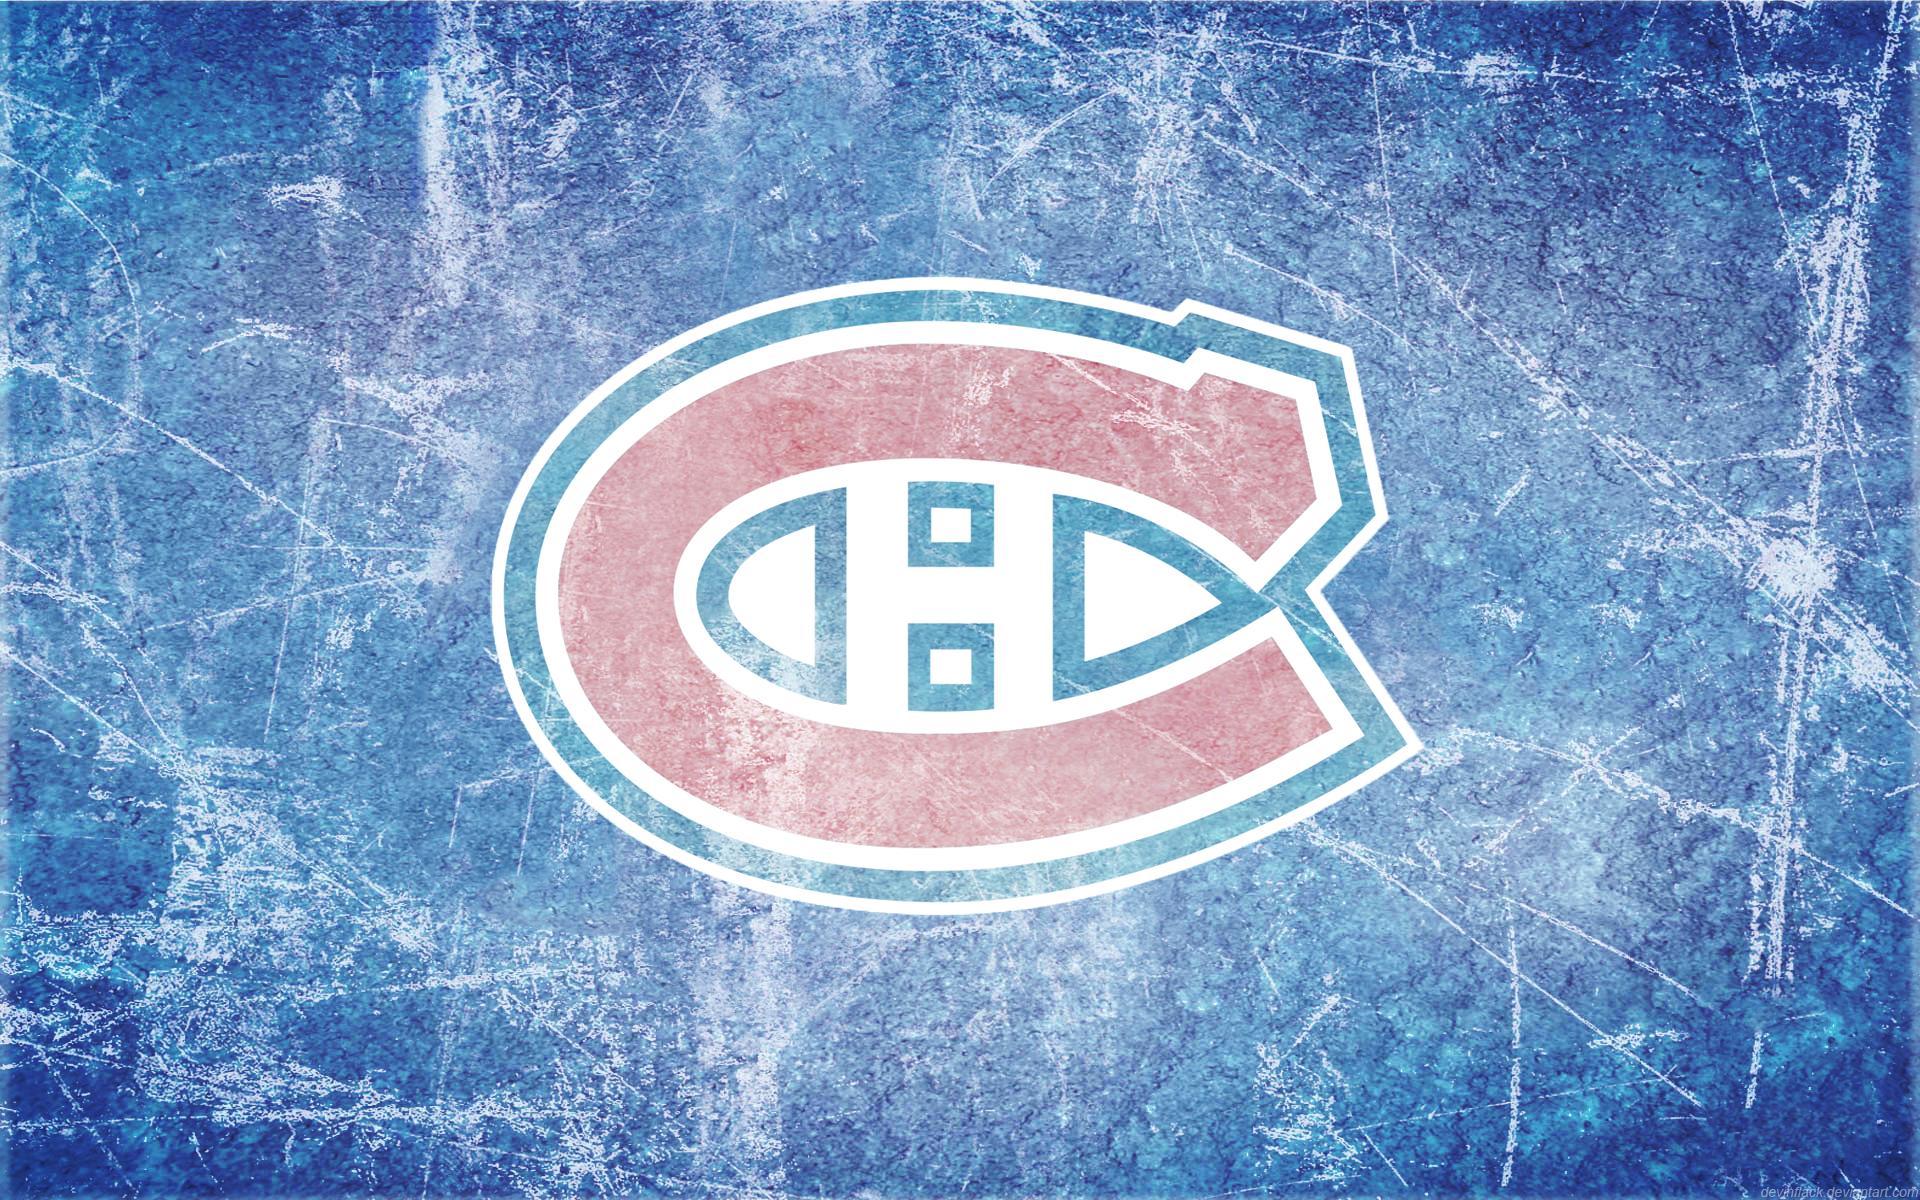 Montreal Canadiens Wallpaper